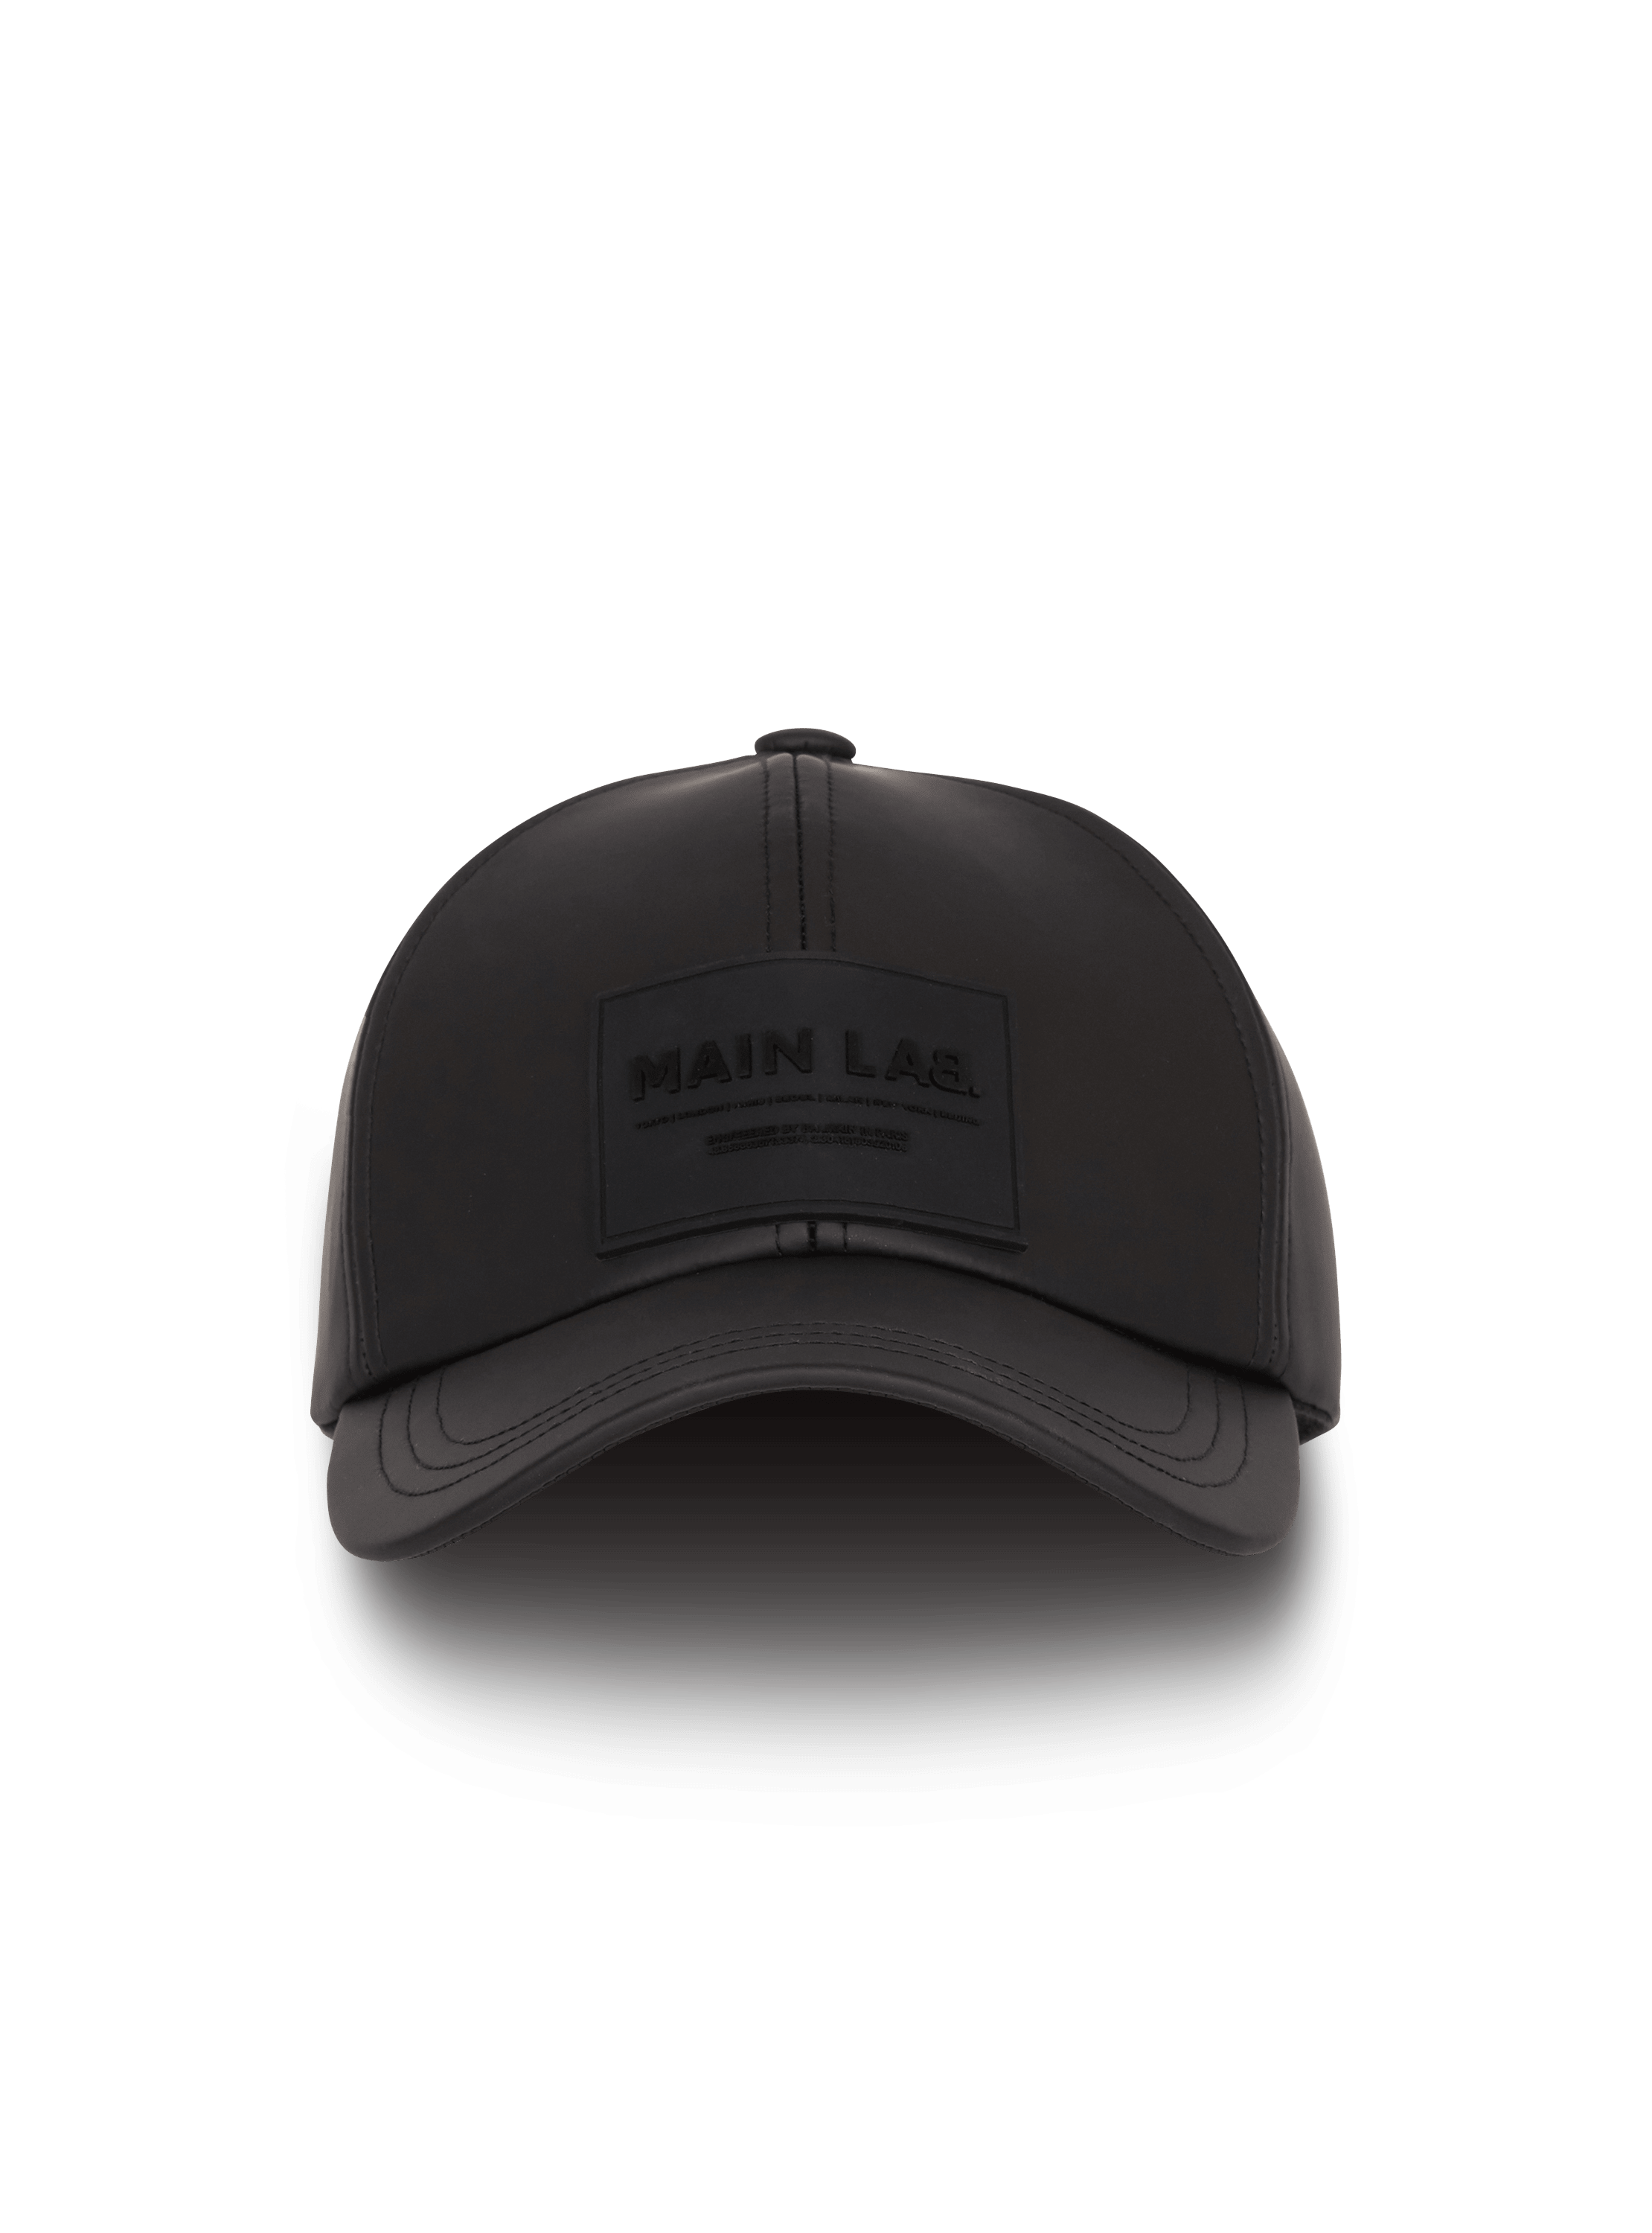 Brockman Supply Co. Men's Cap - Black